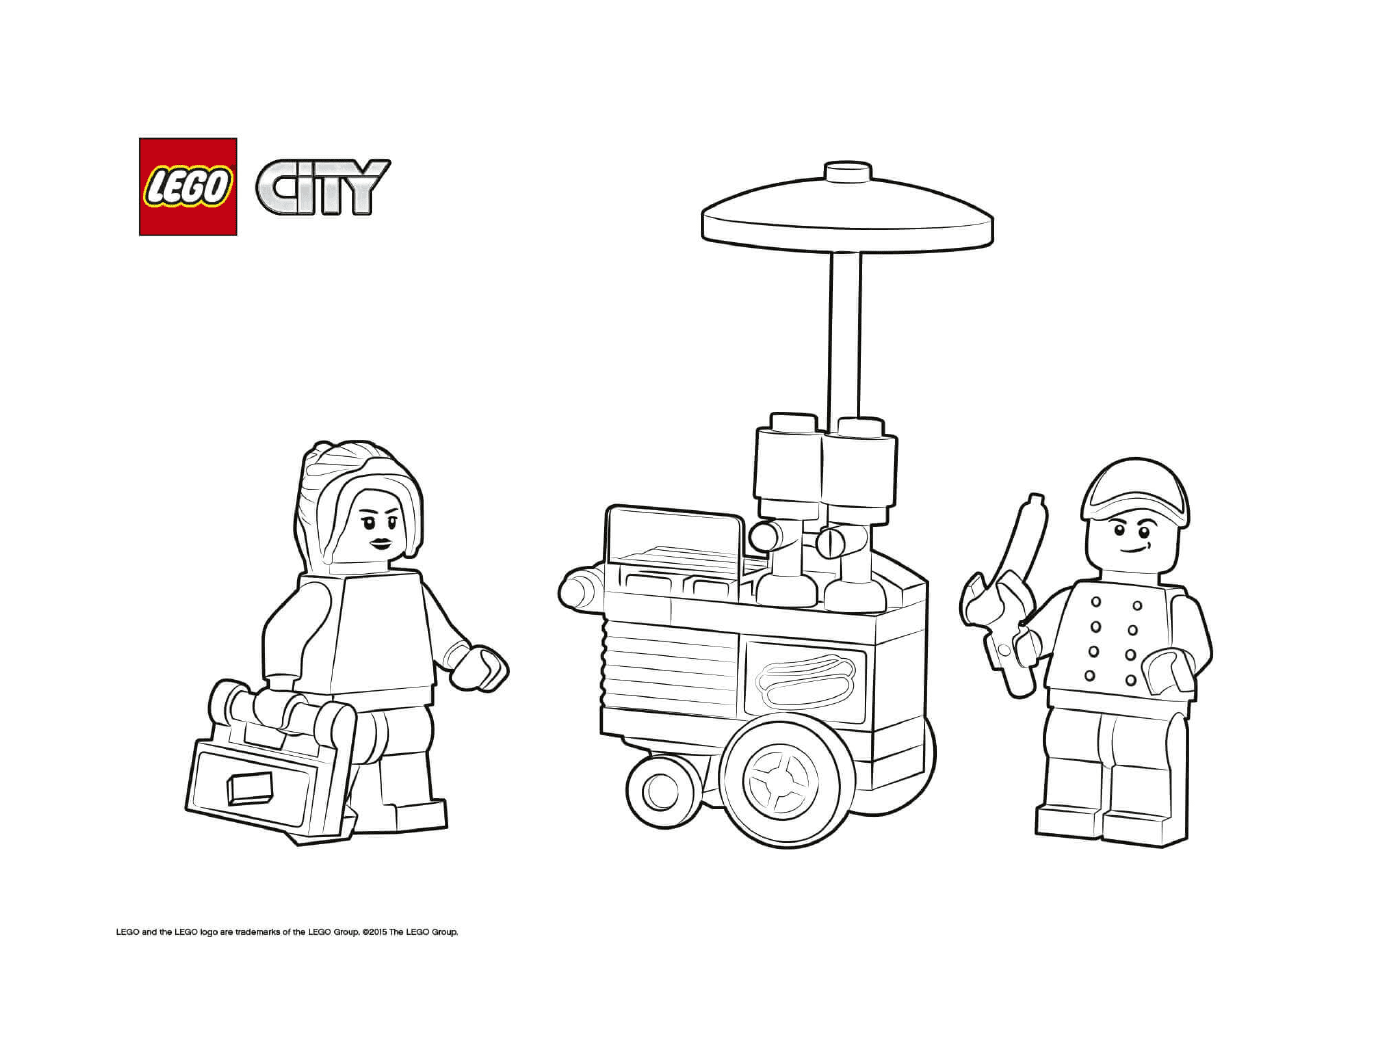   Place Lego City 